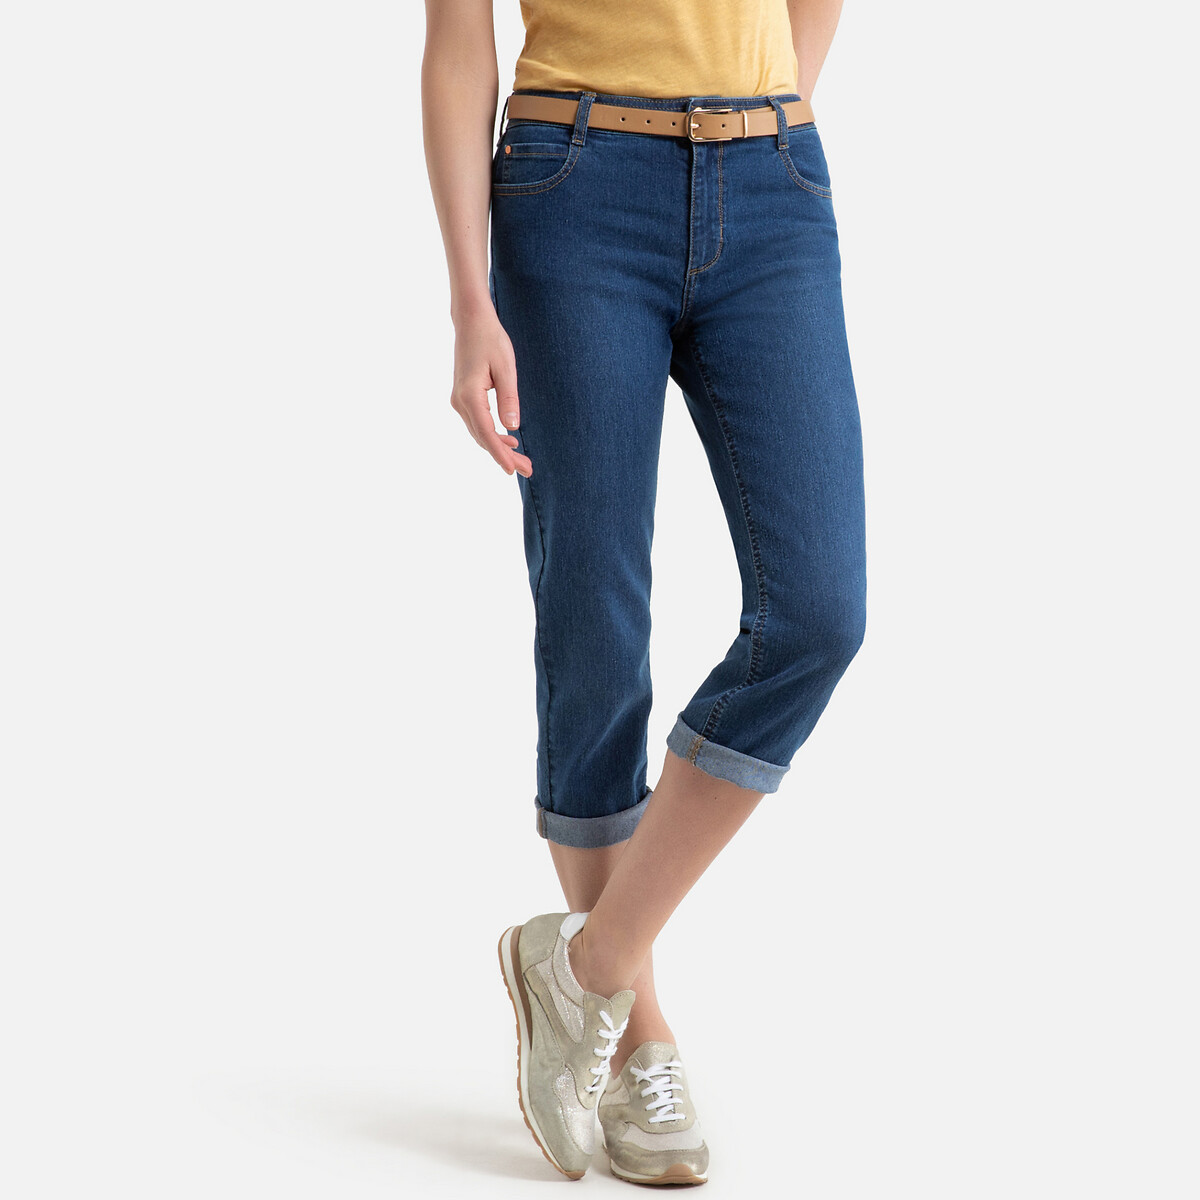 Stretch Denim Cropped Jeans, Length 21.5"